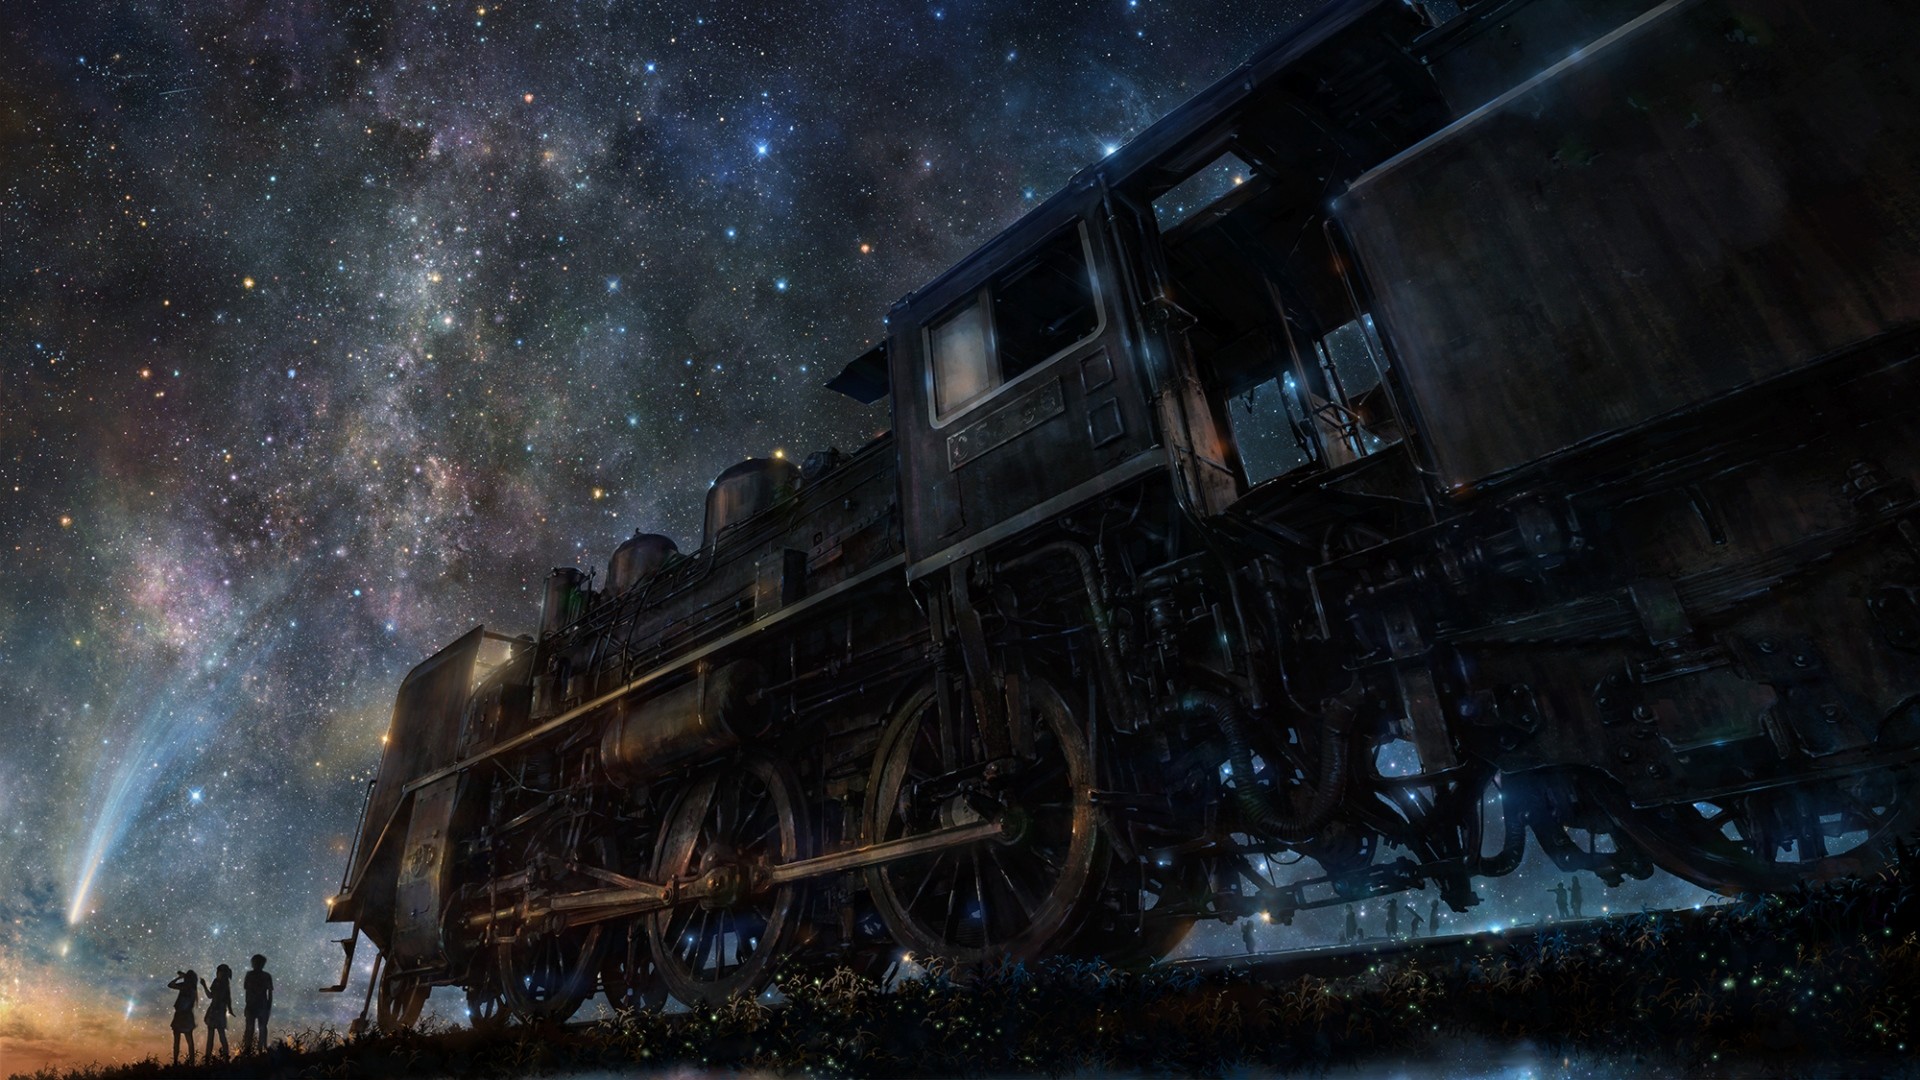 Wallpaper iy tujiki, art, night, train, anime, starry sky